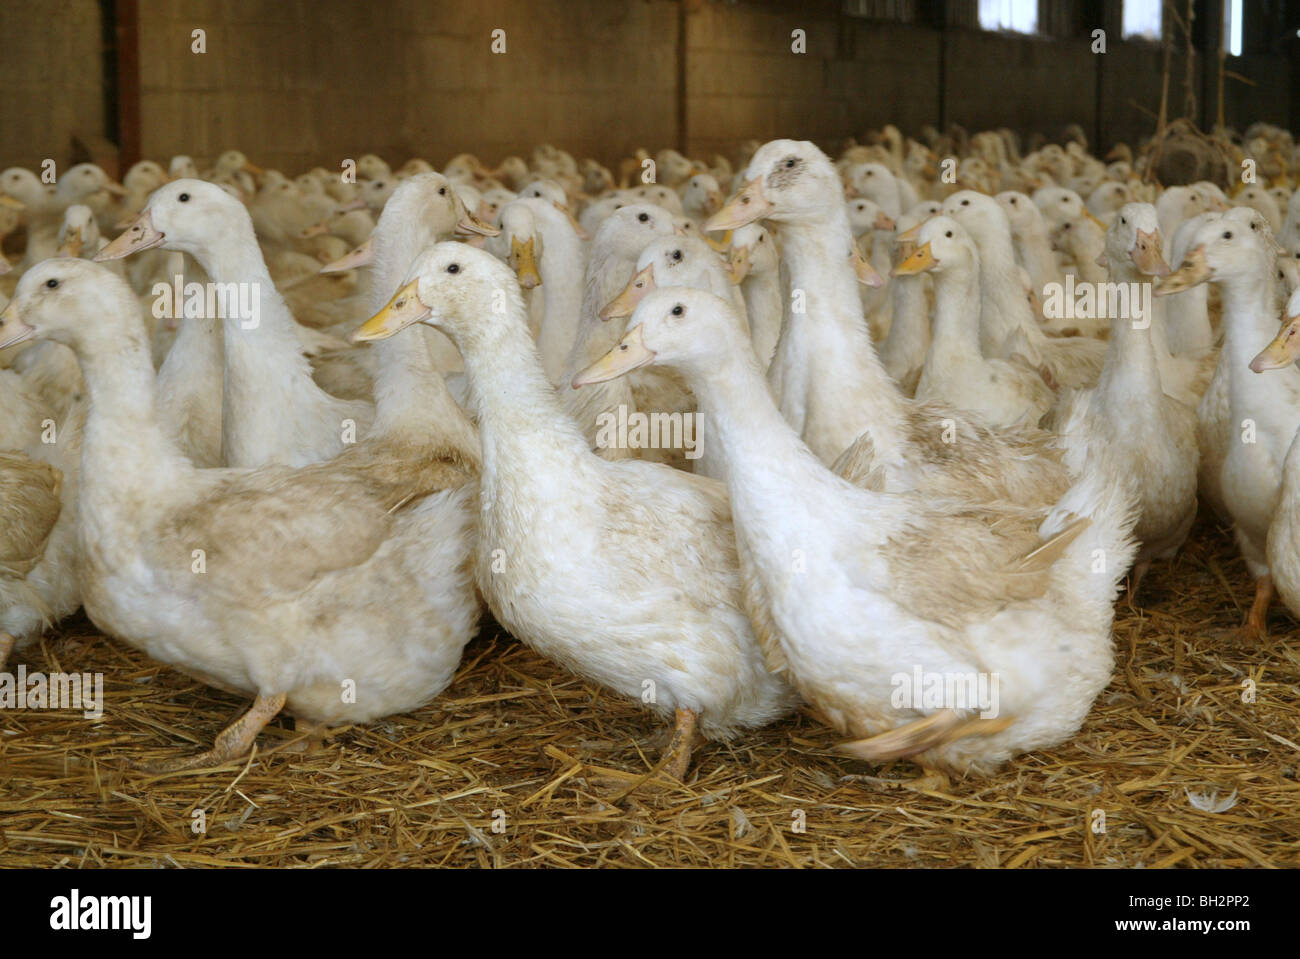 Barn feed ducks for egg production Stock Photo